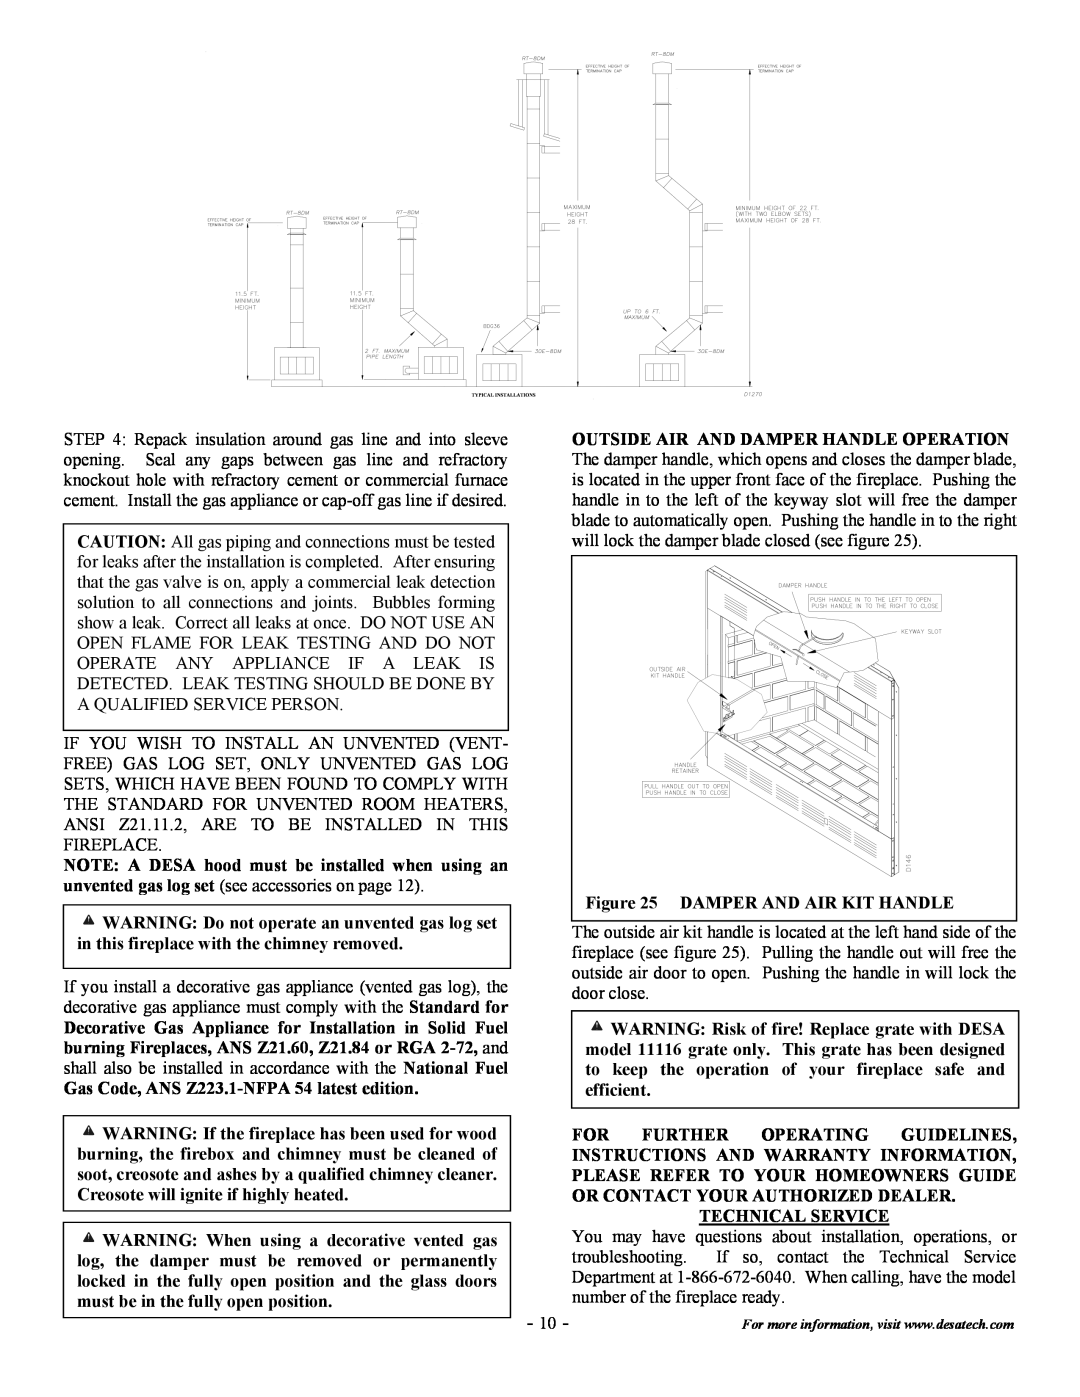 Desa C36EMW installation instructions Gas Code, ANS Z223.1-NFPA54 latest edition 